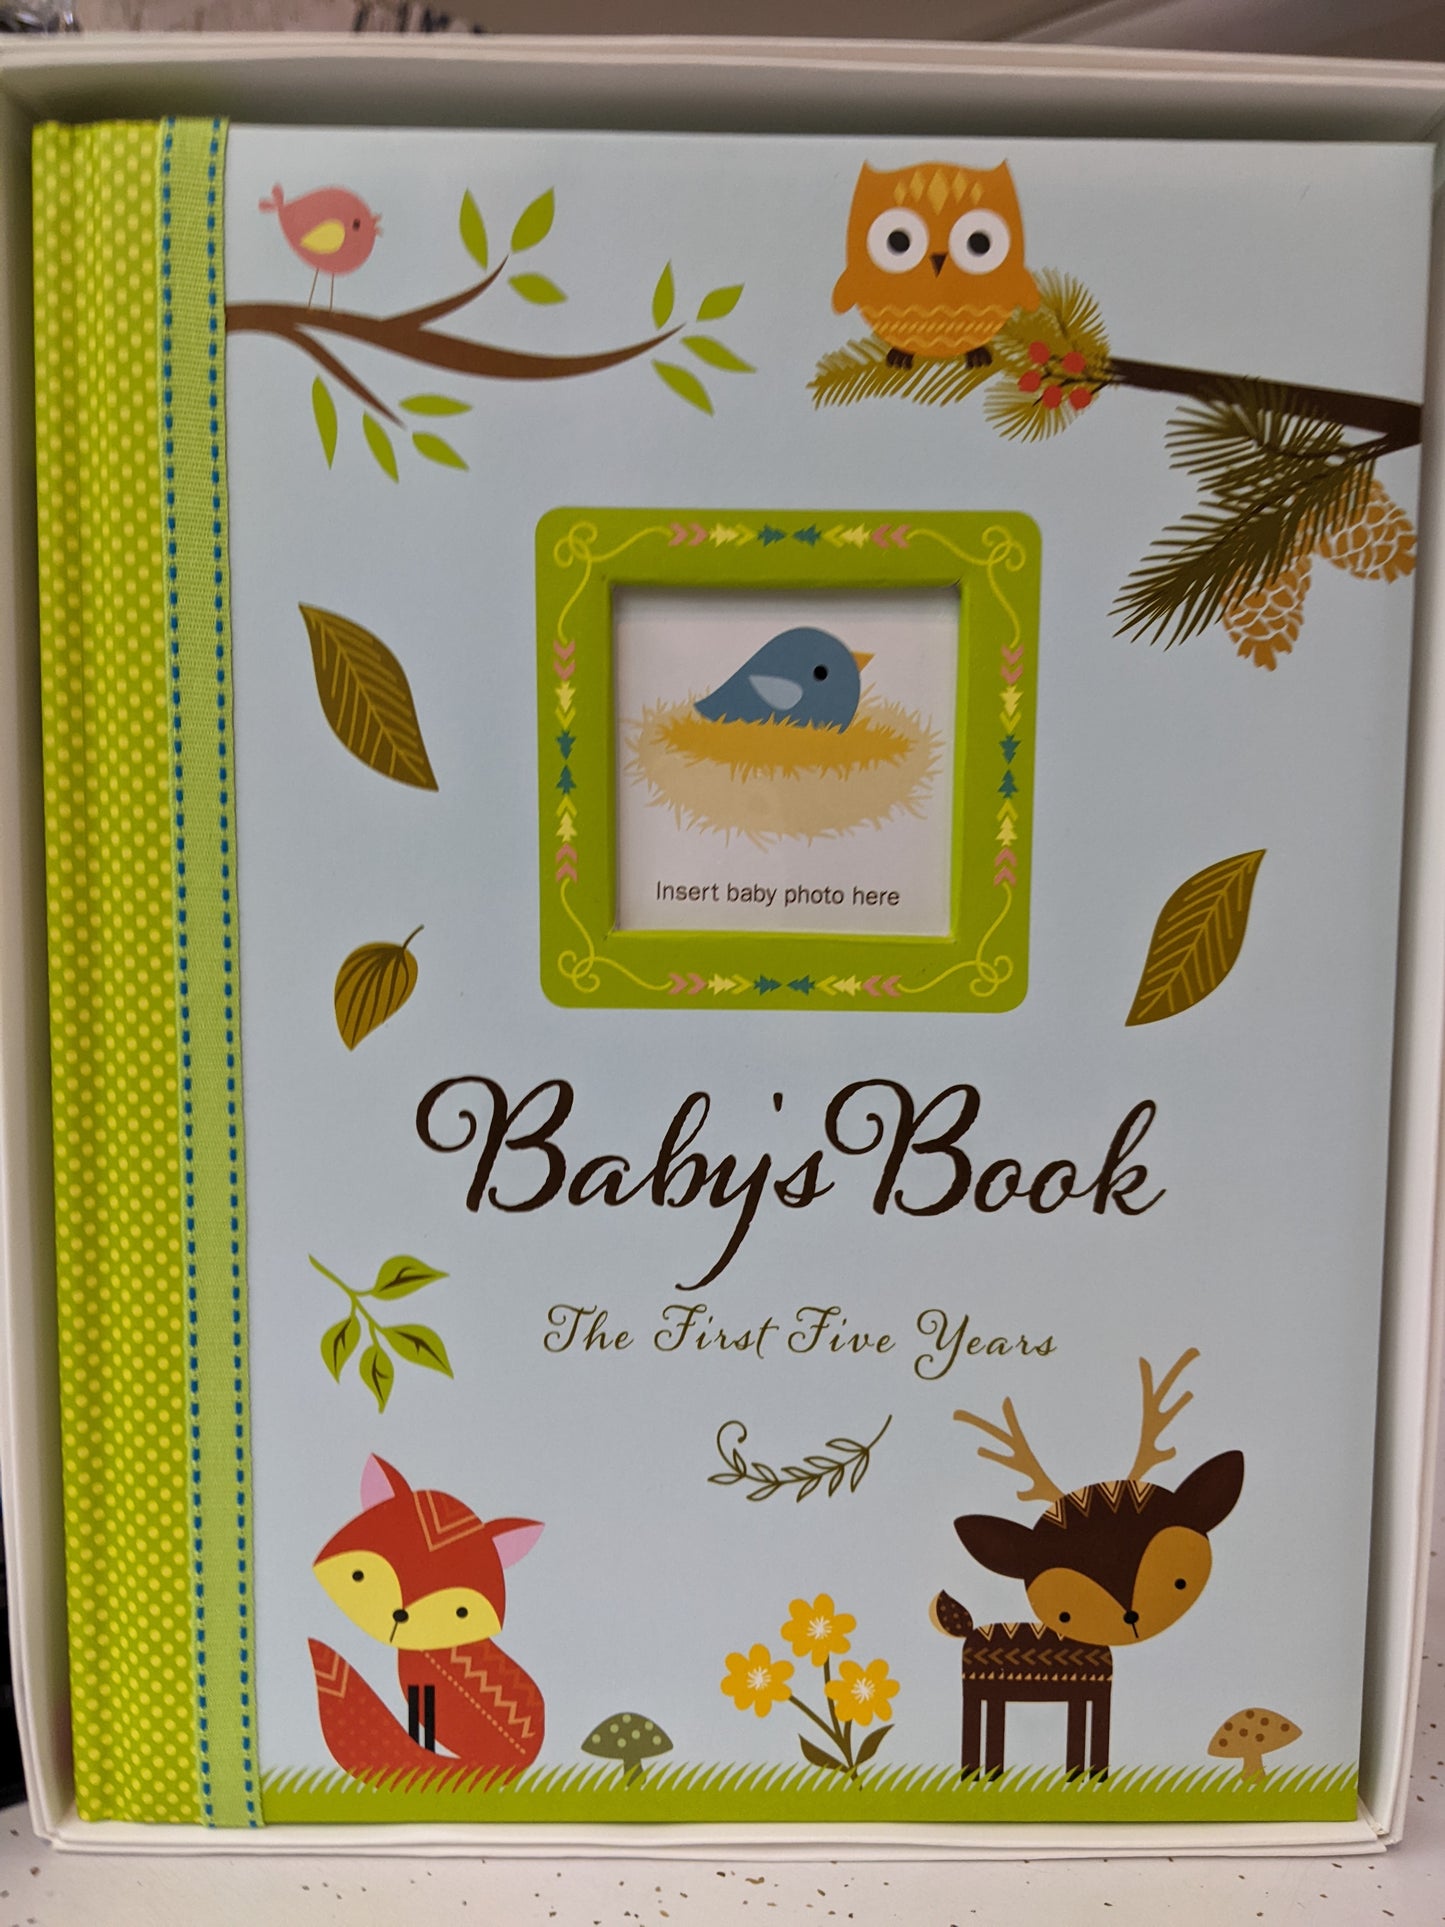 Baby's Book